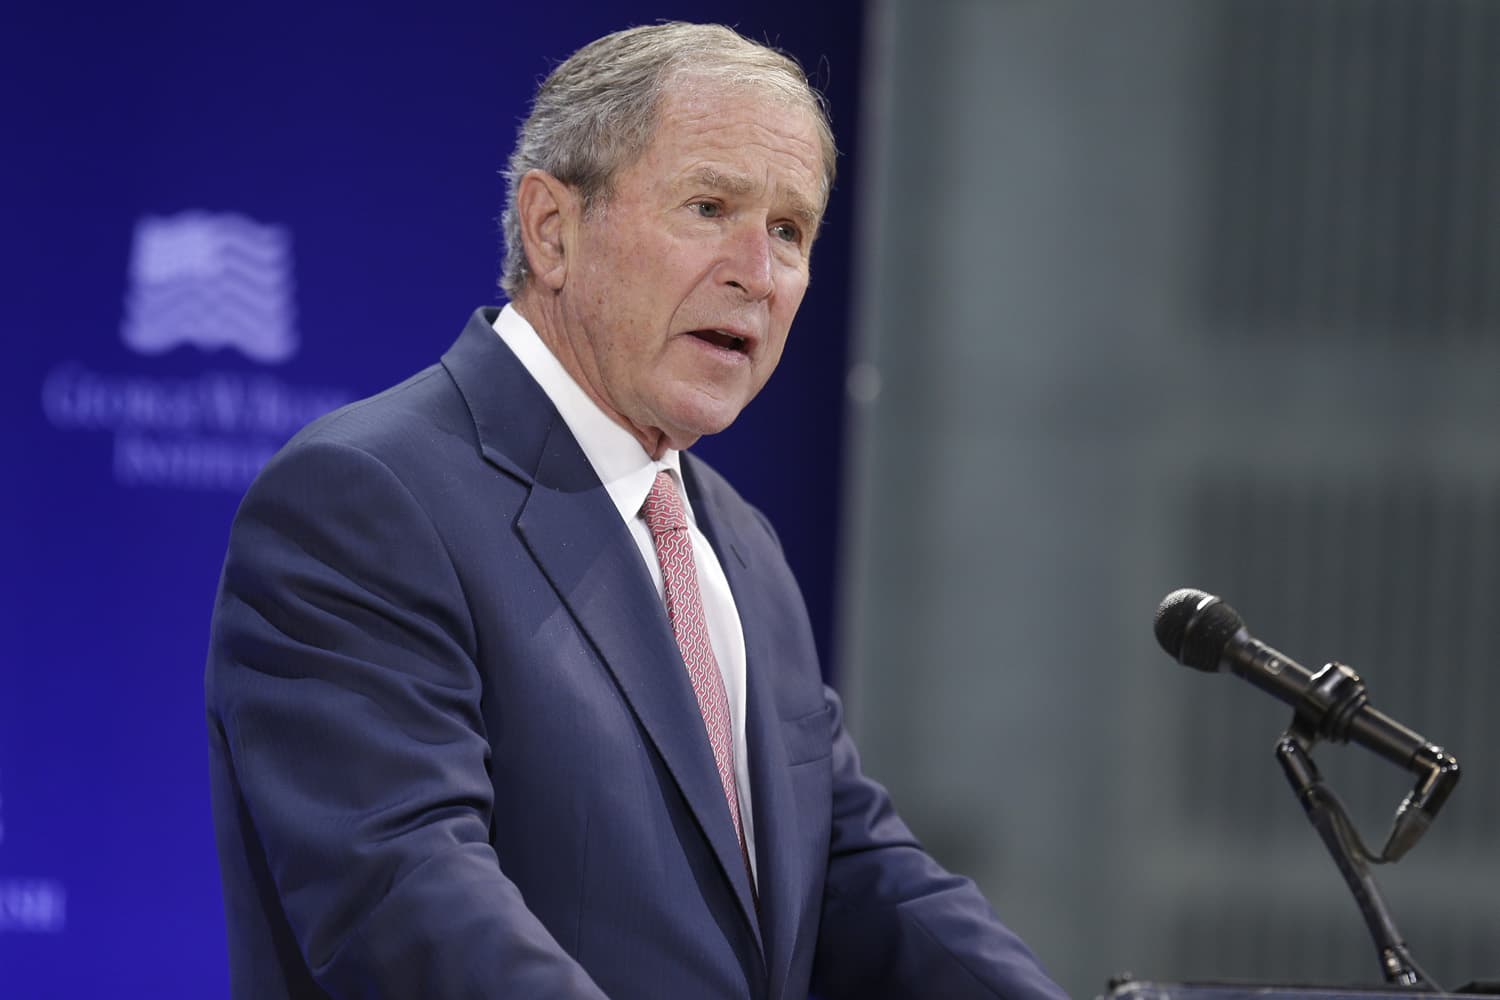 Former U.S. President George W. Bush speaks at a forum sponsored by the George W. Bush Institute in New York, Thursday, Oct. 19, 2017. (Seth Wenig/AP)